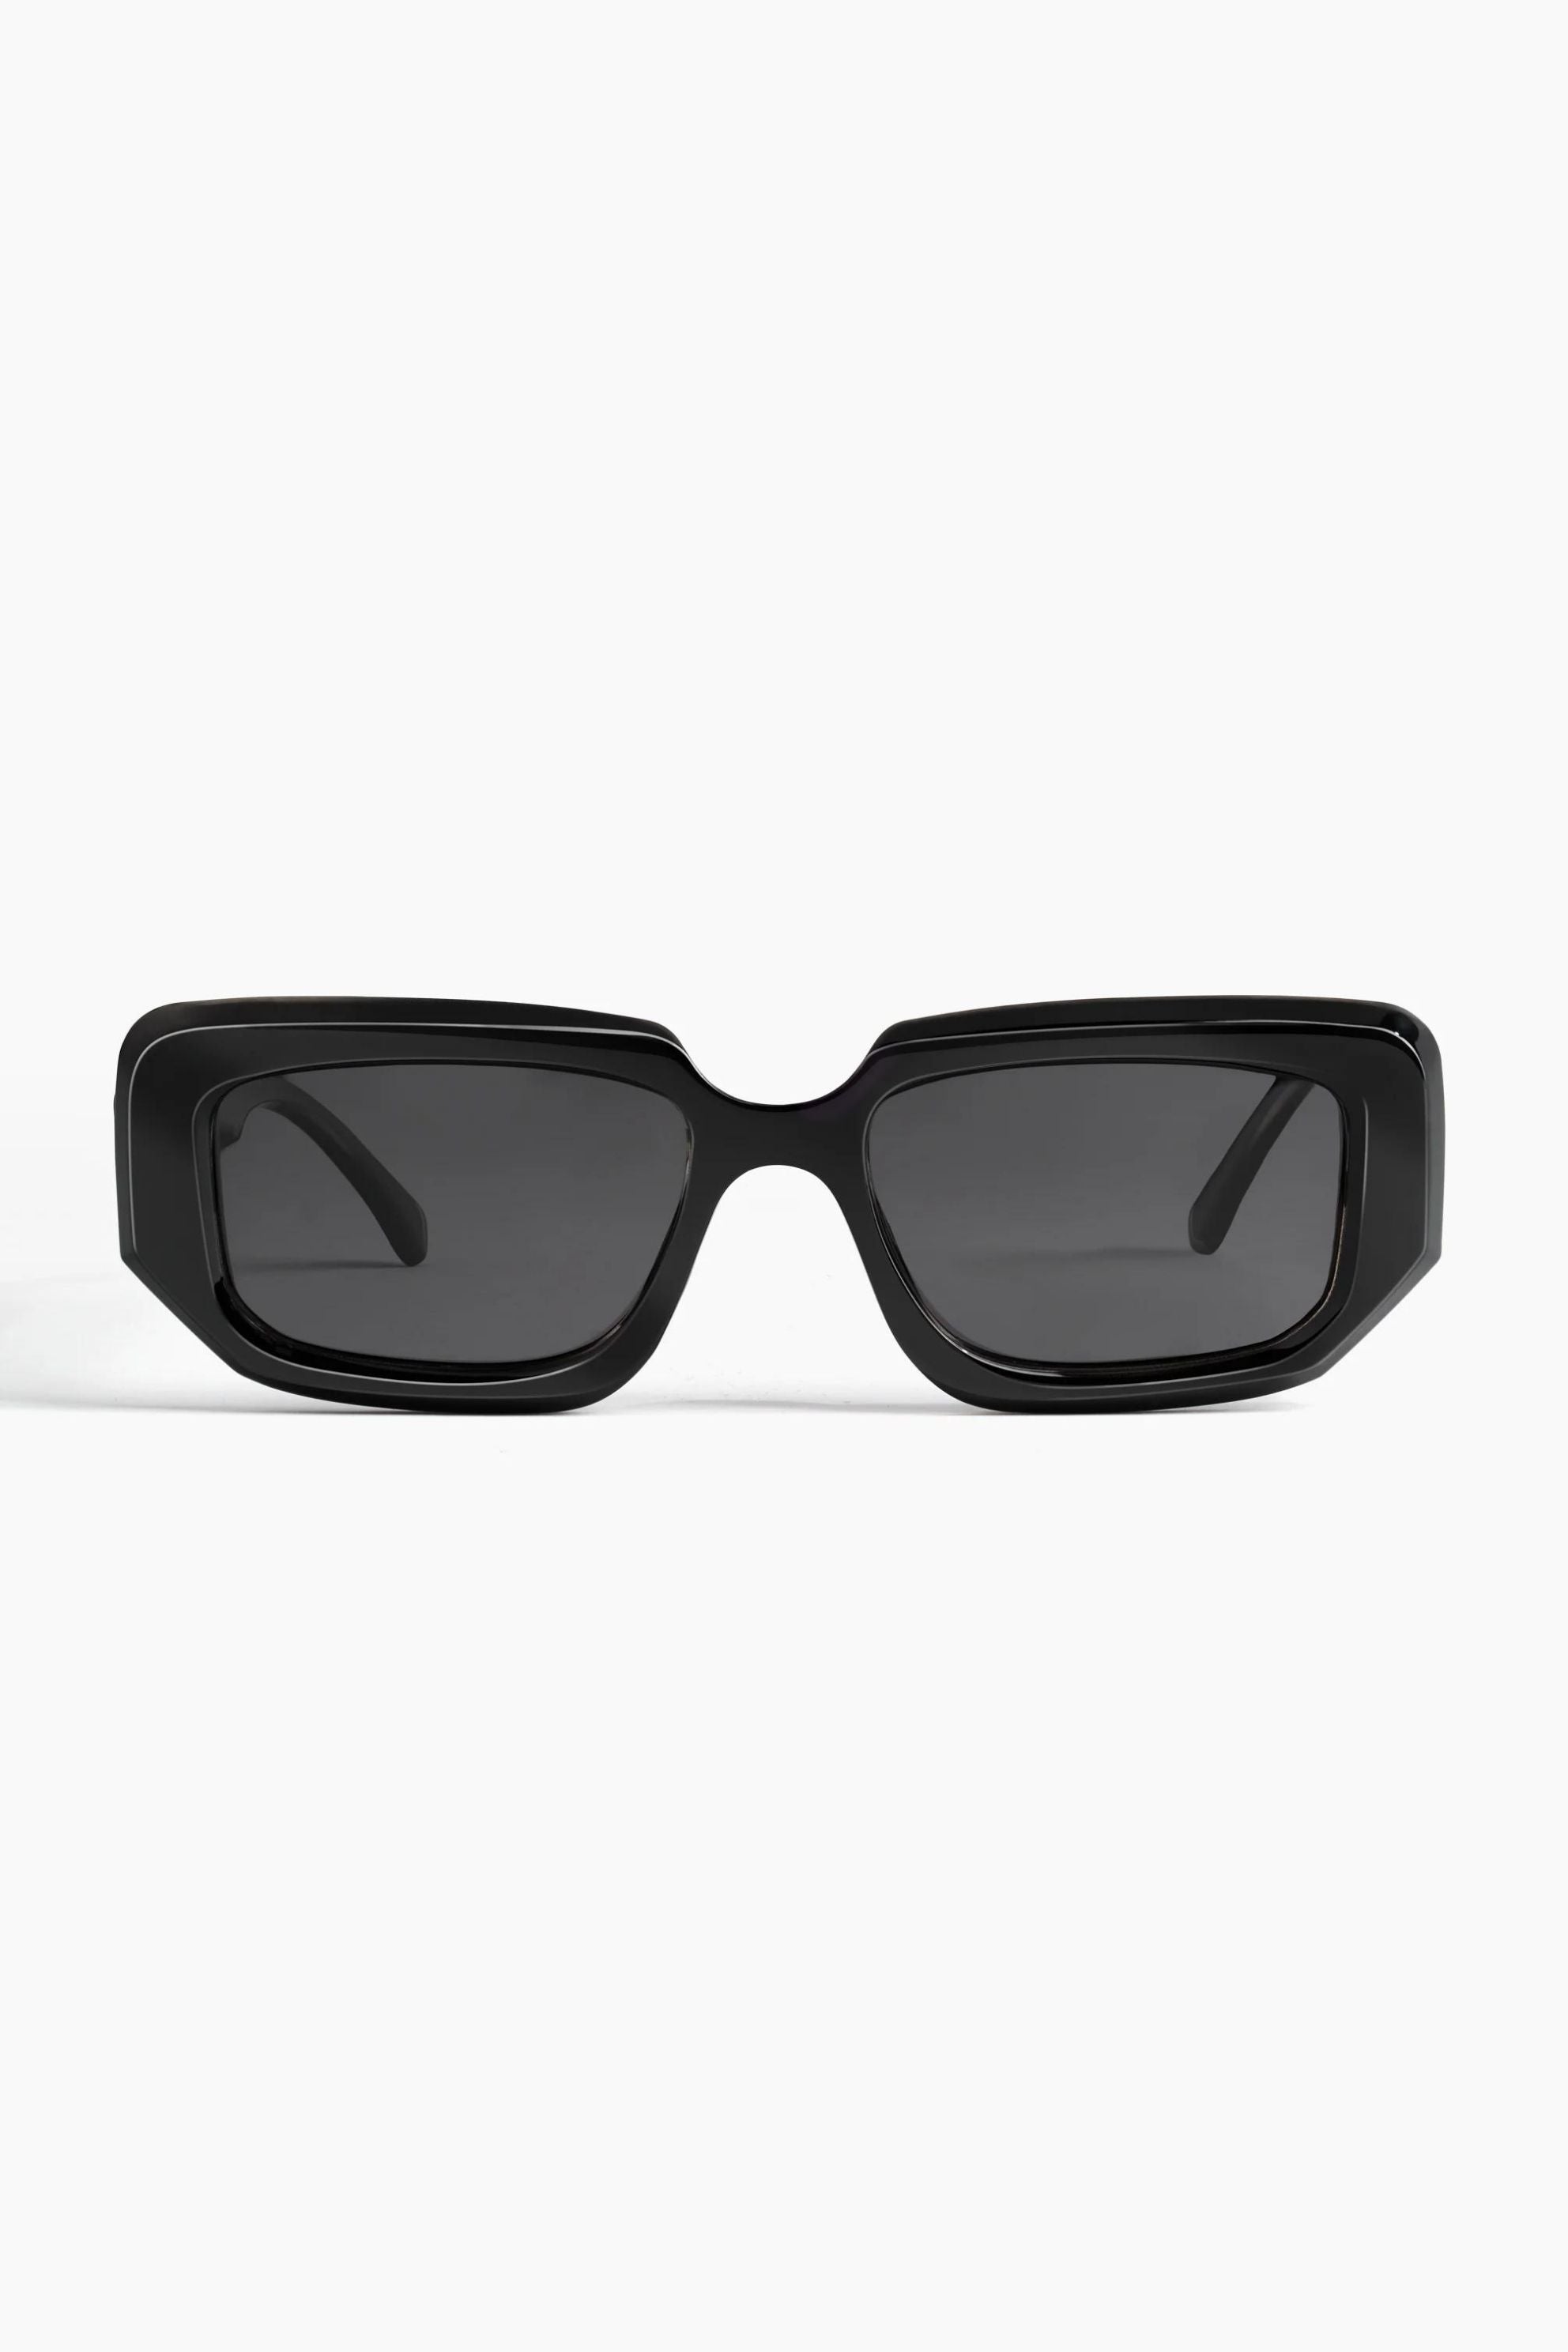 Banks Sunglasses Elysium Double Black